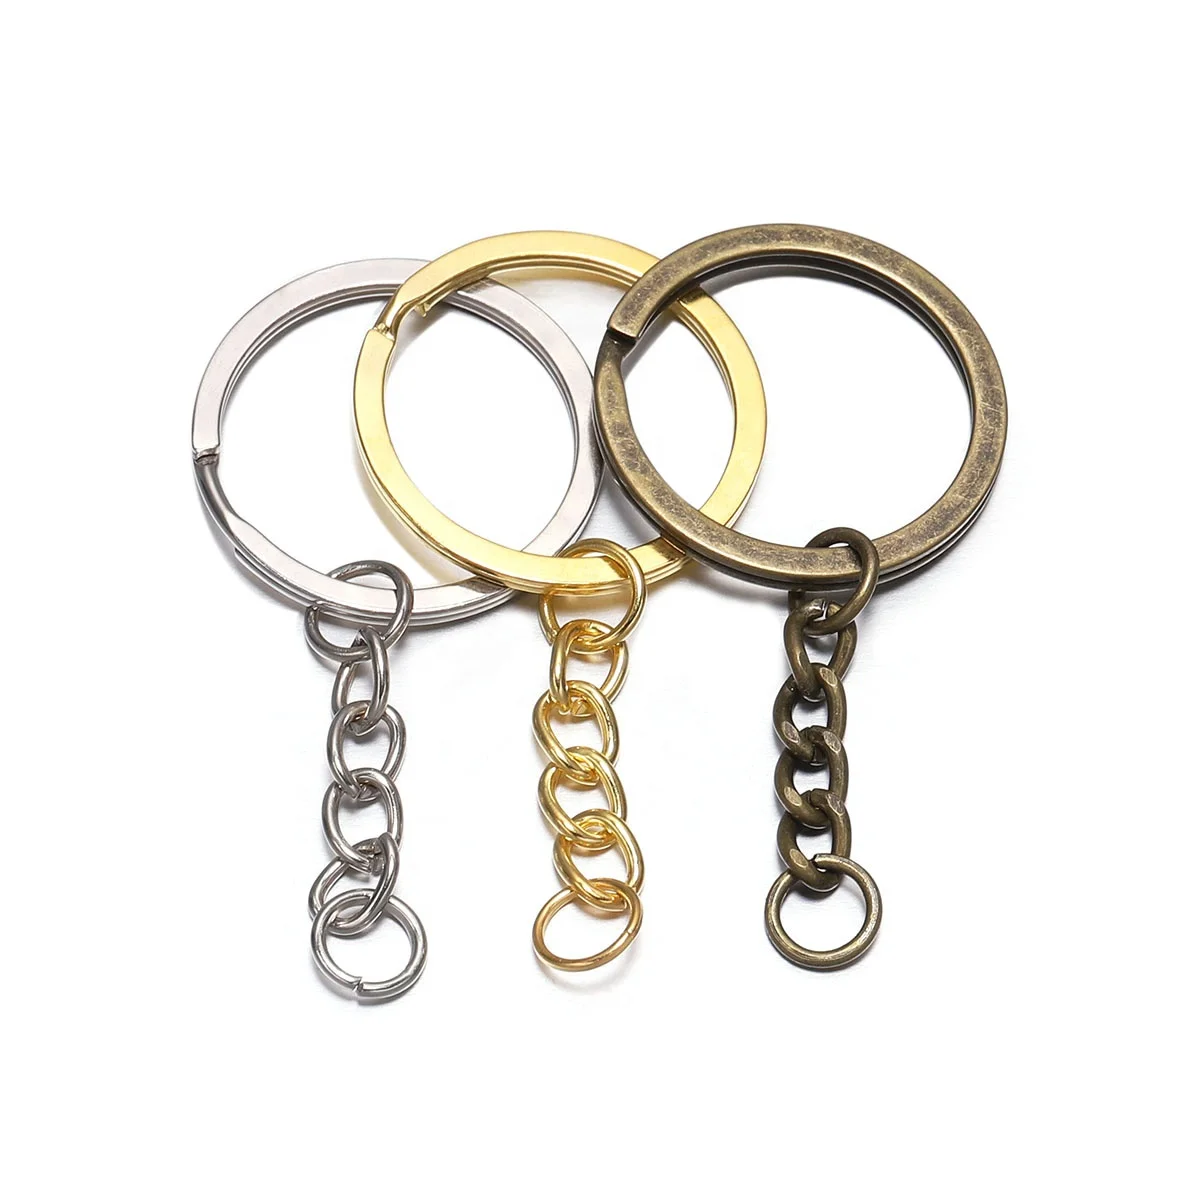 

10 pcs/lot Key Ring Key Chain Gold Rhodium Antique Bronze 60mm Long Round Split Keychain Keyrings Jewelry Making Bulk Wholesale, Gold,silver,rhodium,antique bronze,gun black/